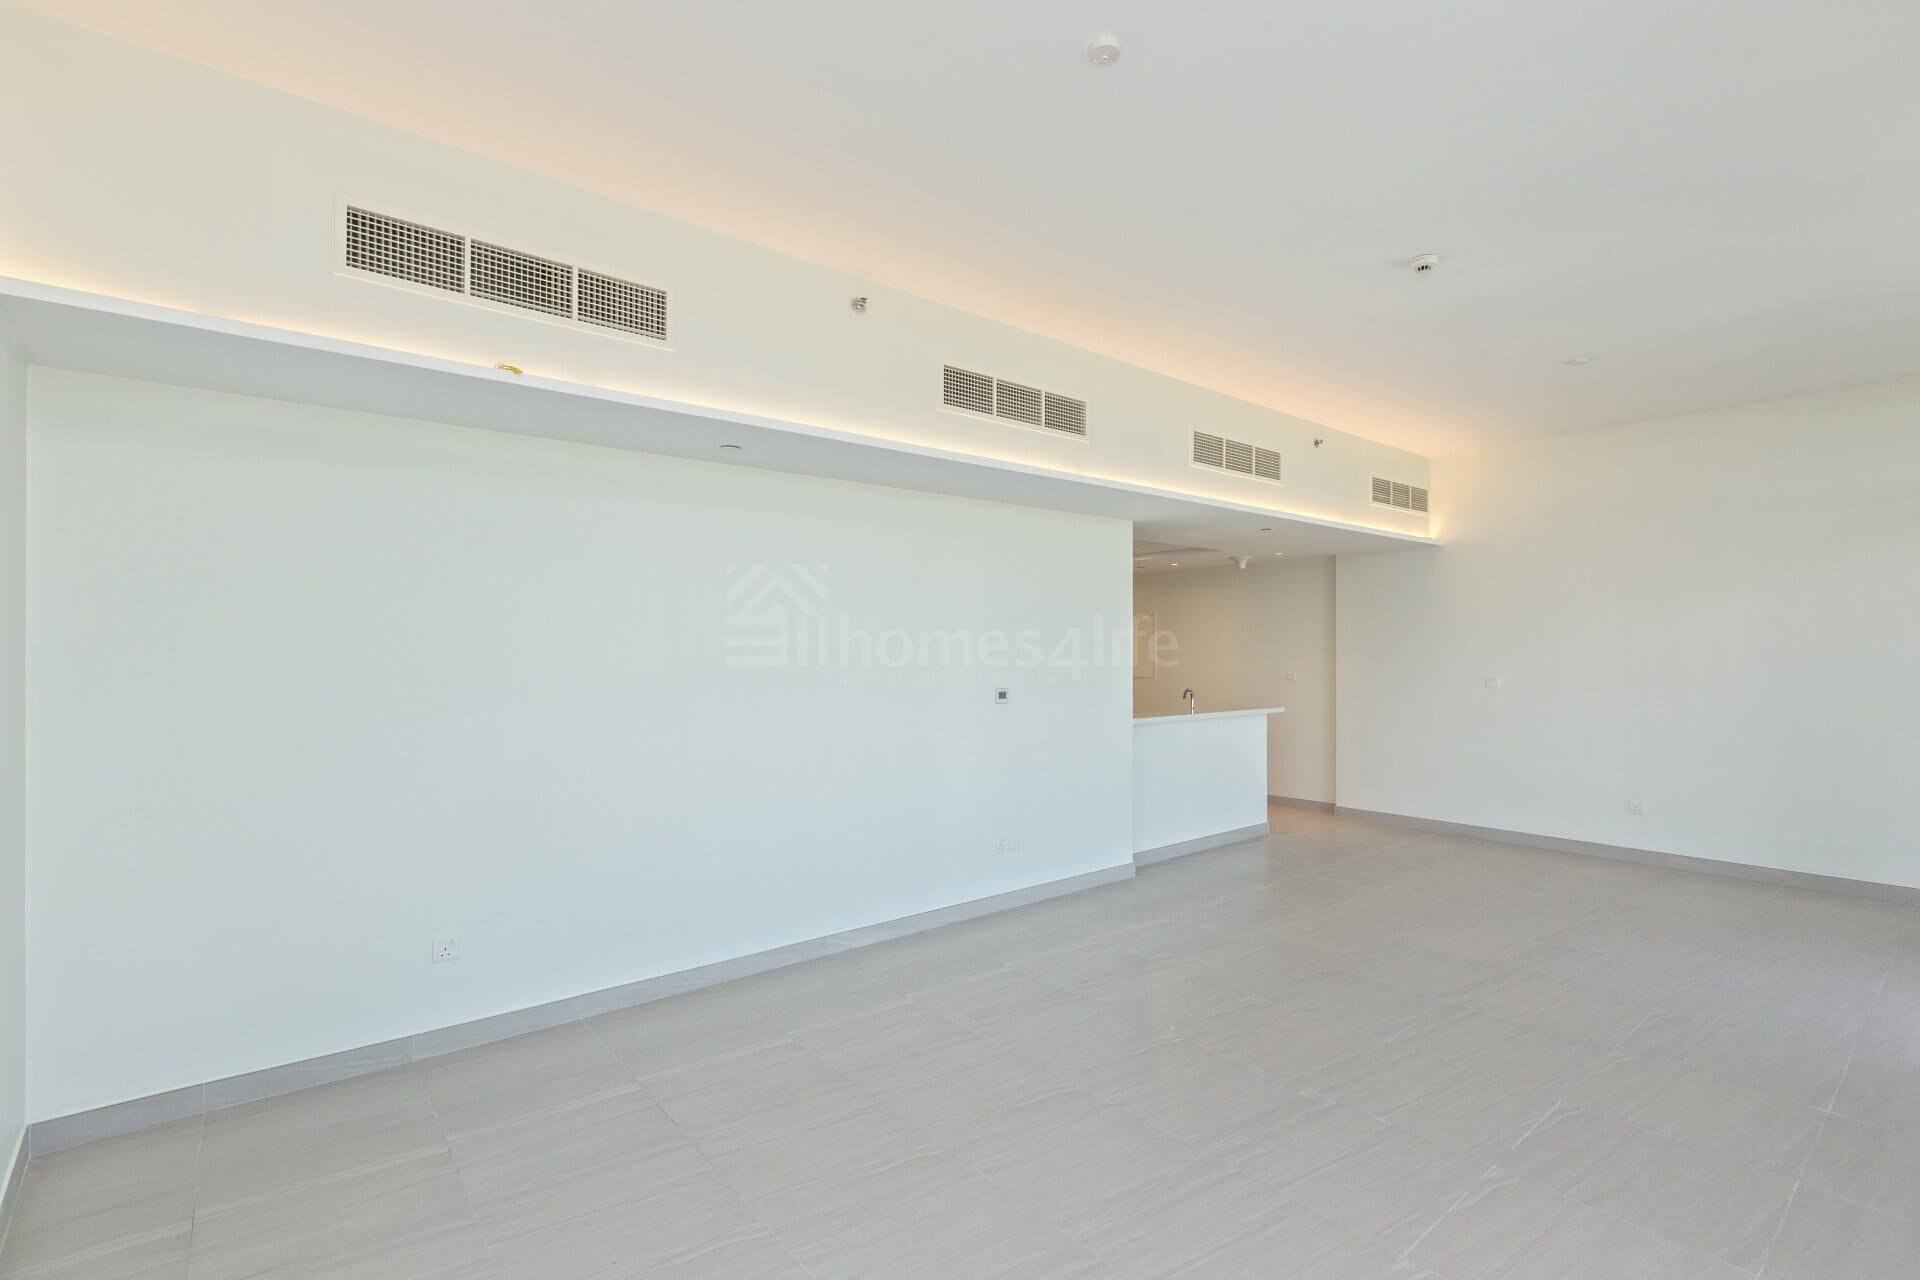 Real Estate_Apartments for Sale_Al Kifaf